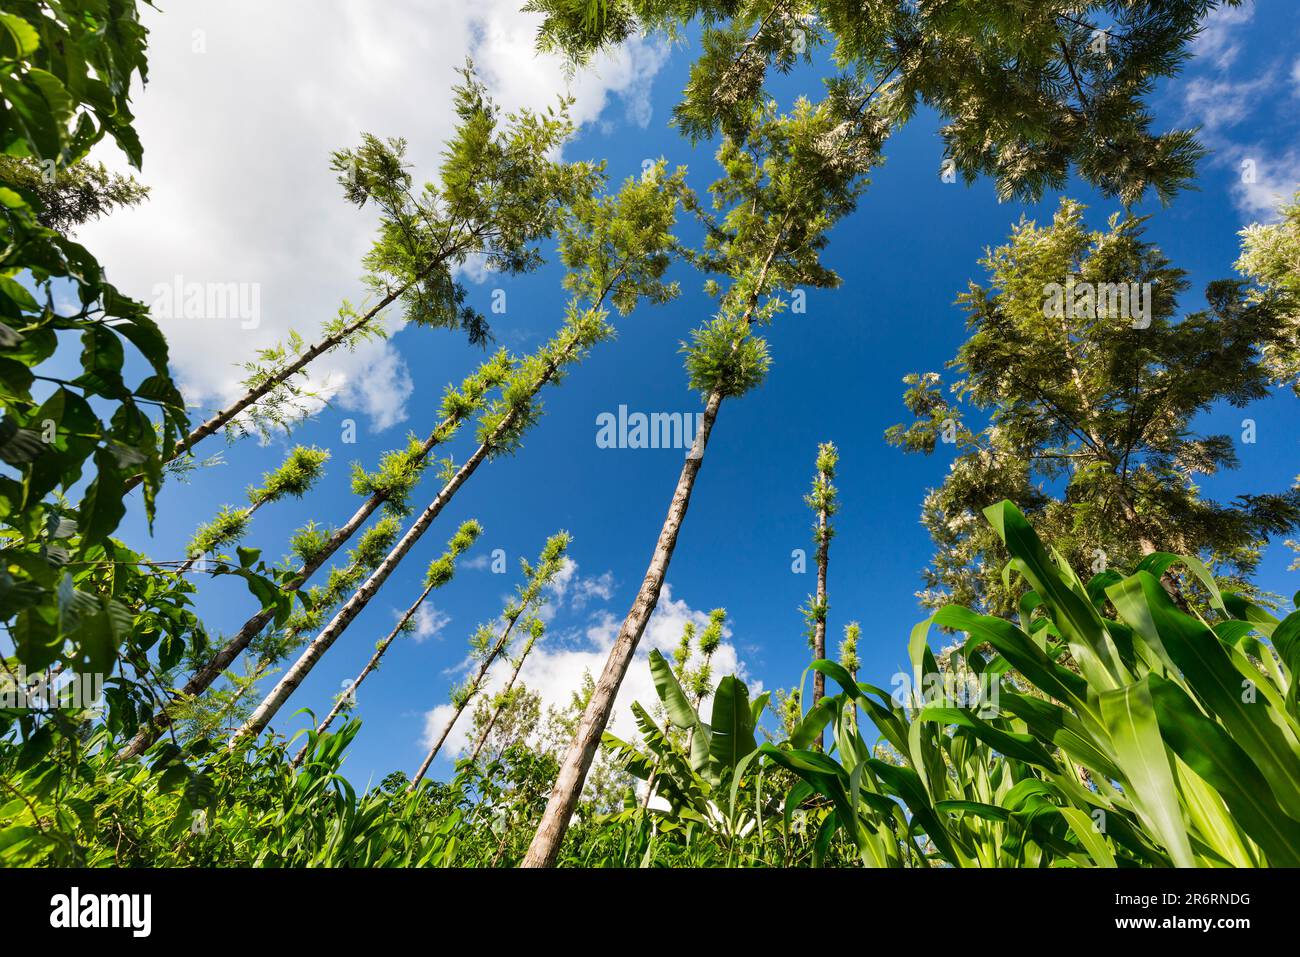 Corn growing between trees in Kiambu County, Kenya. Low angle view. Stock Photo